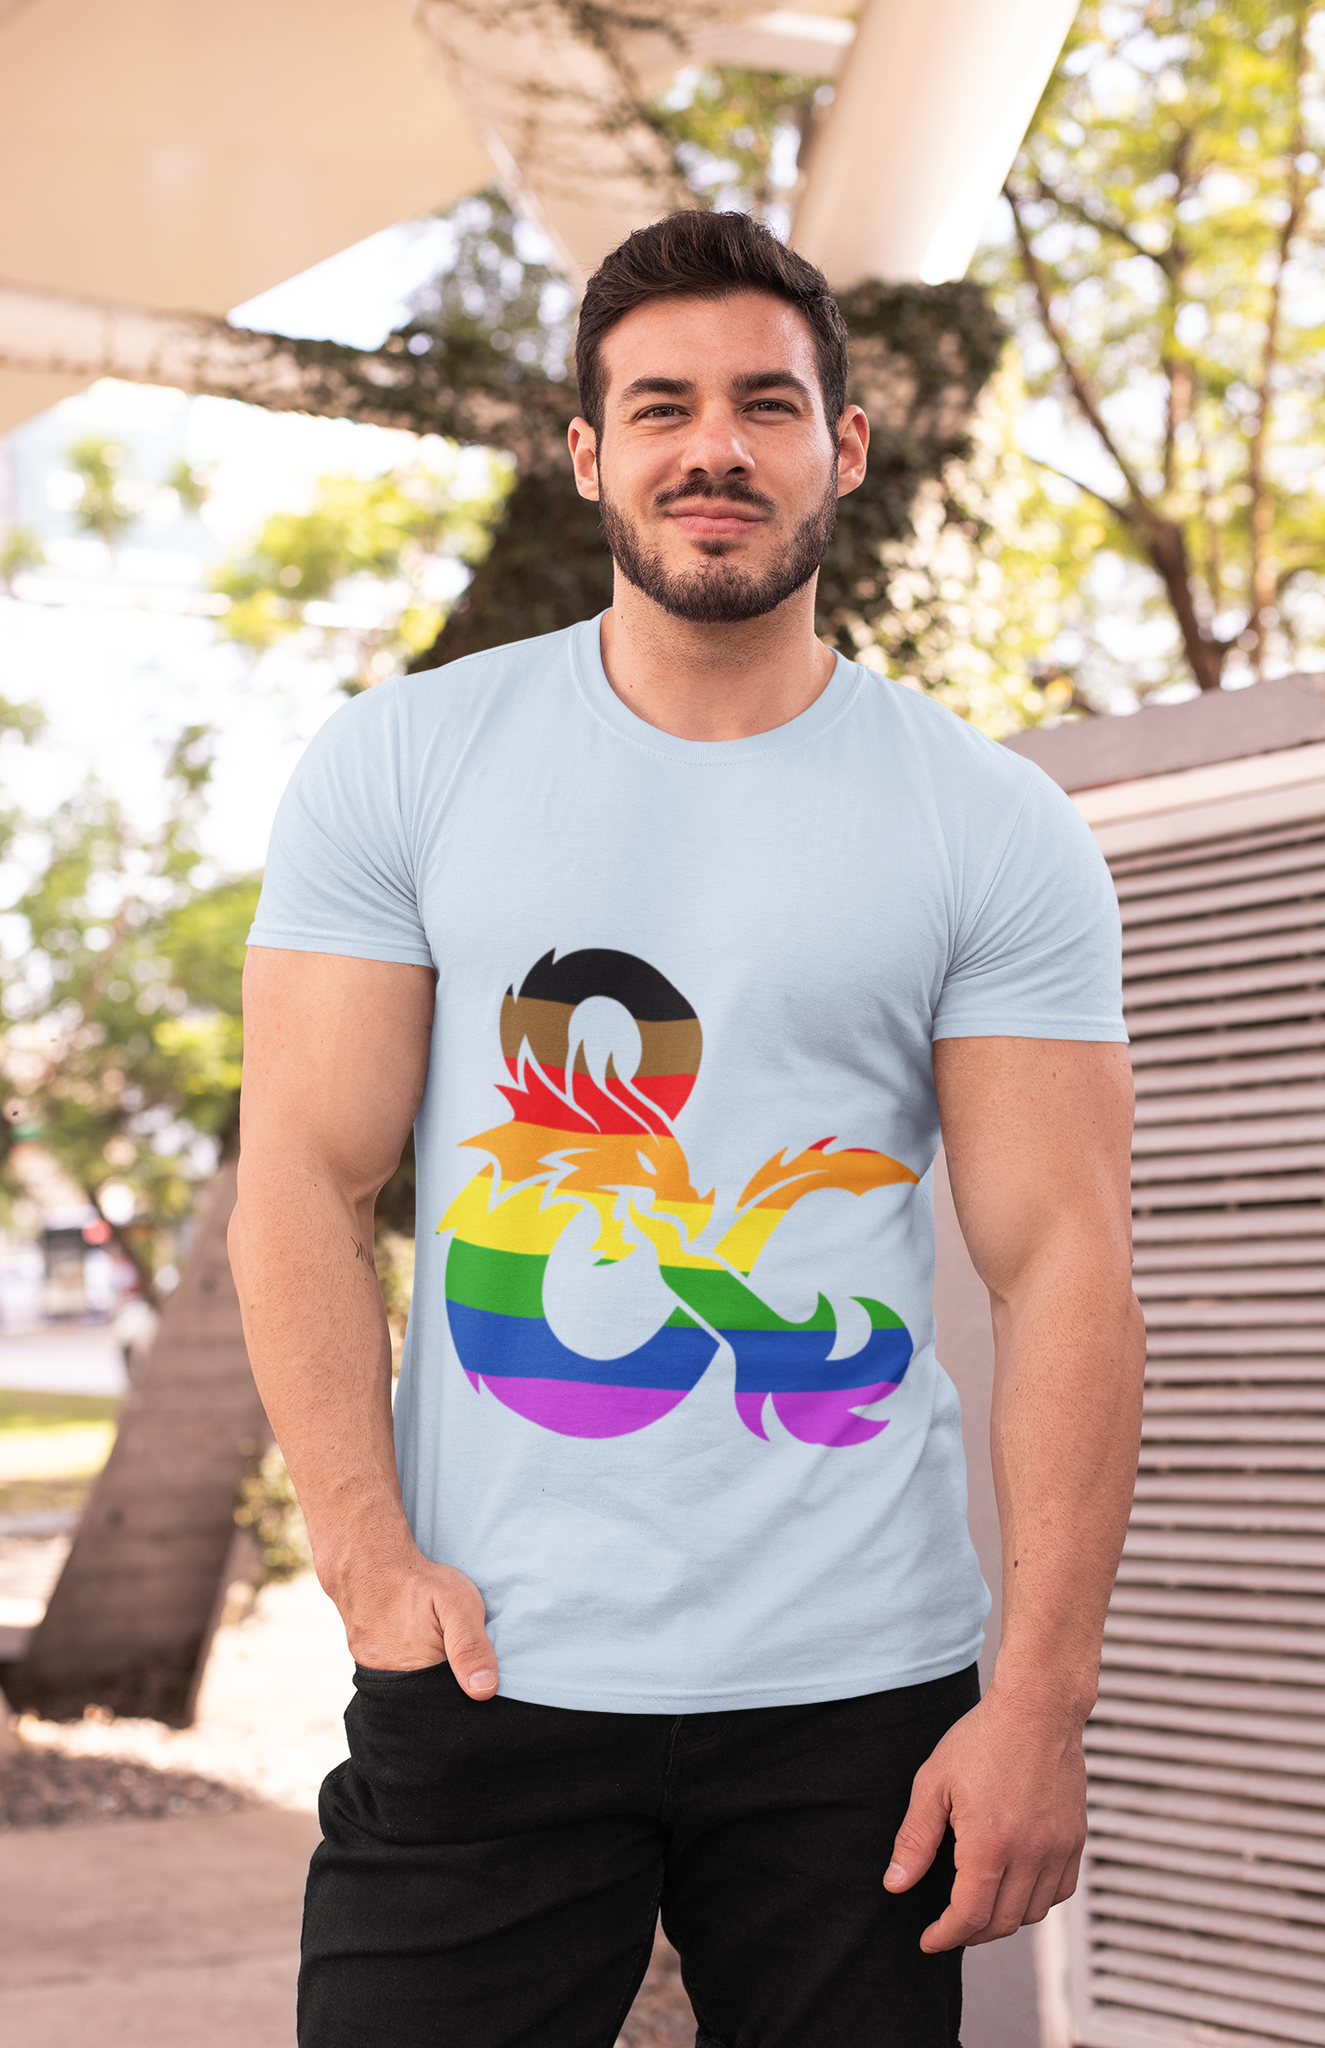 Dungeon And Dragon T Shirt, RPG Dice Games Tshirt, LGBT Color Symbol T Shirt